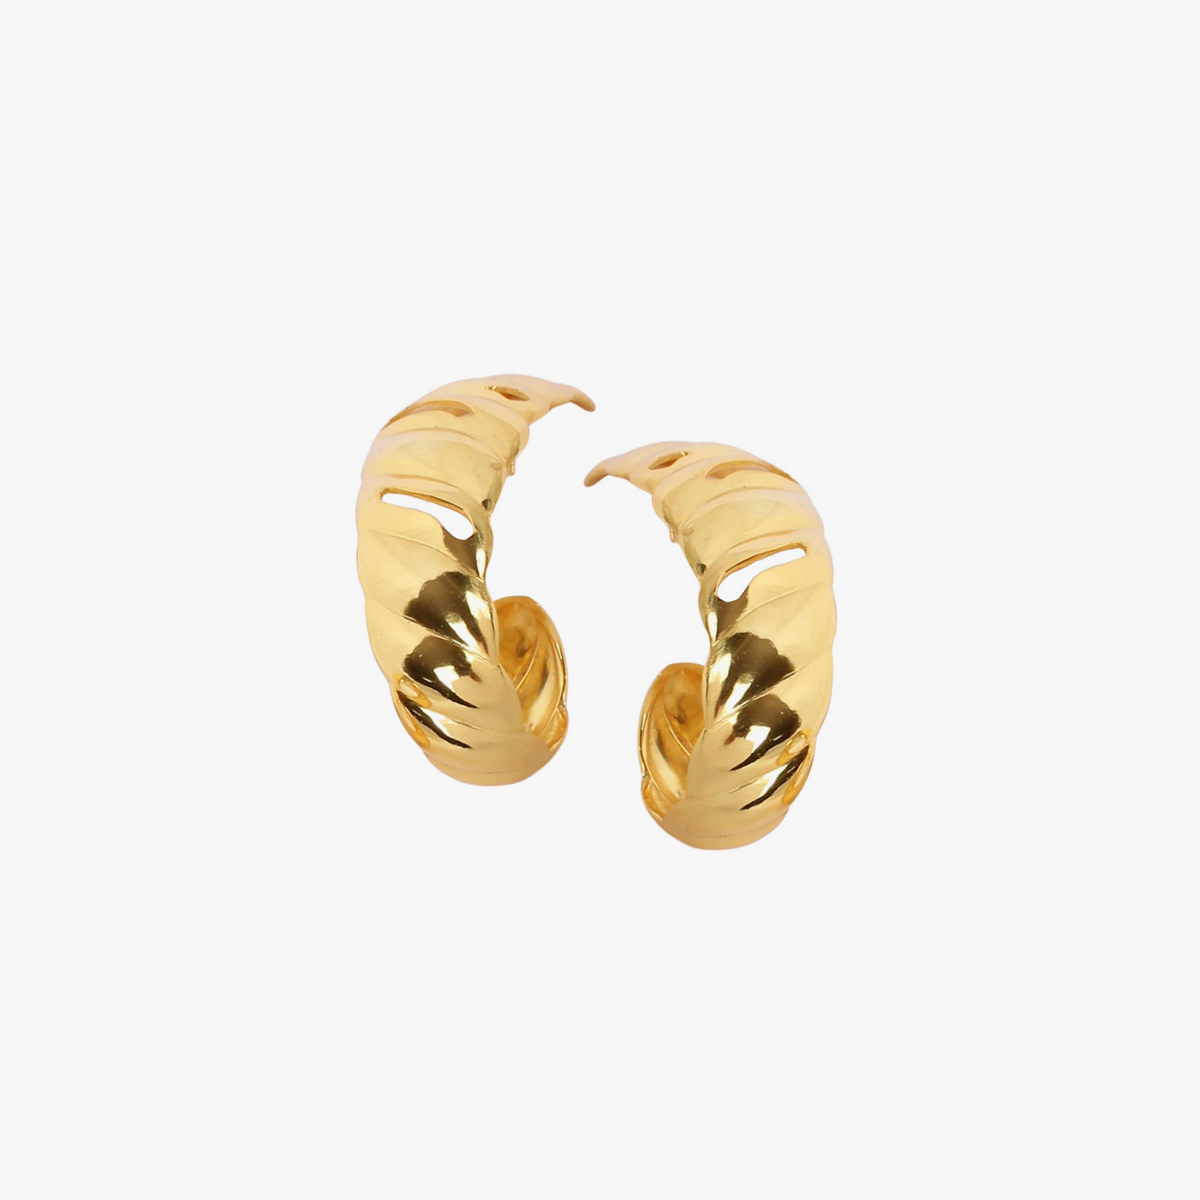 Aqua Swirl Earrings - Gold Tone